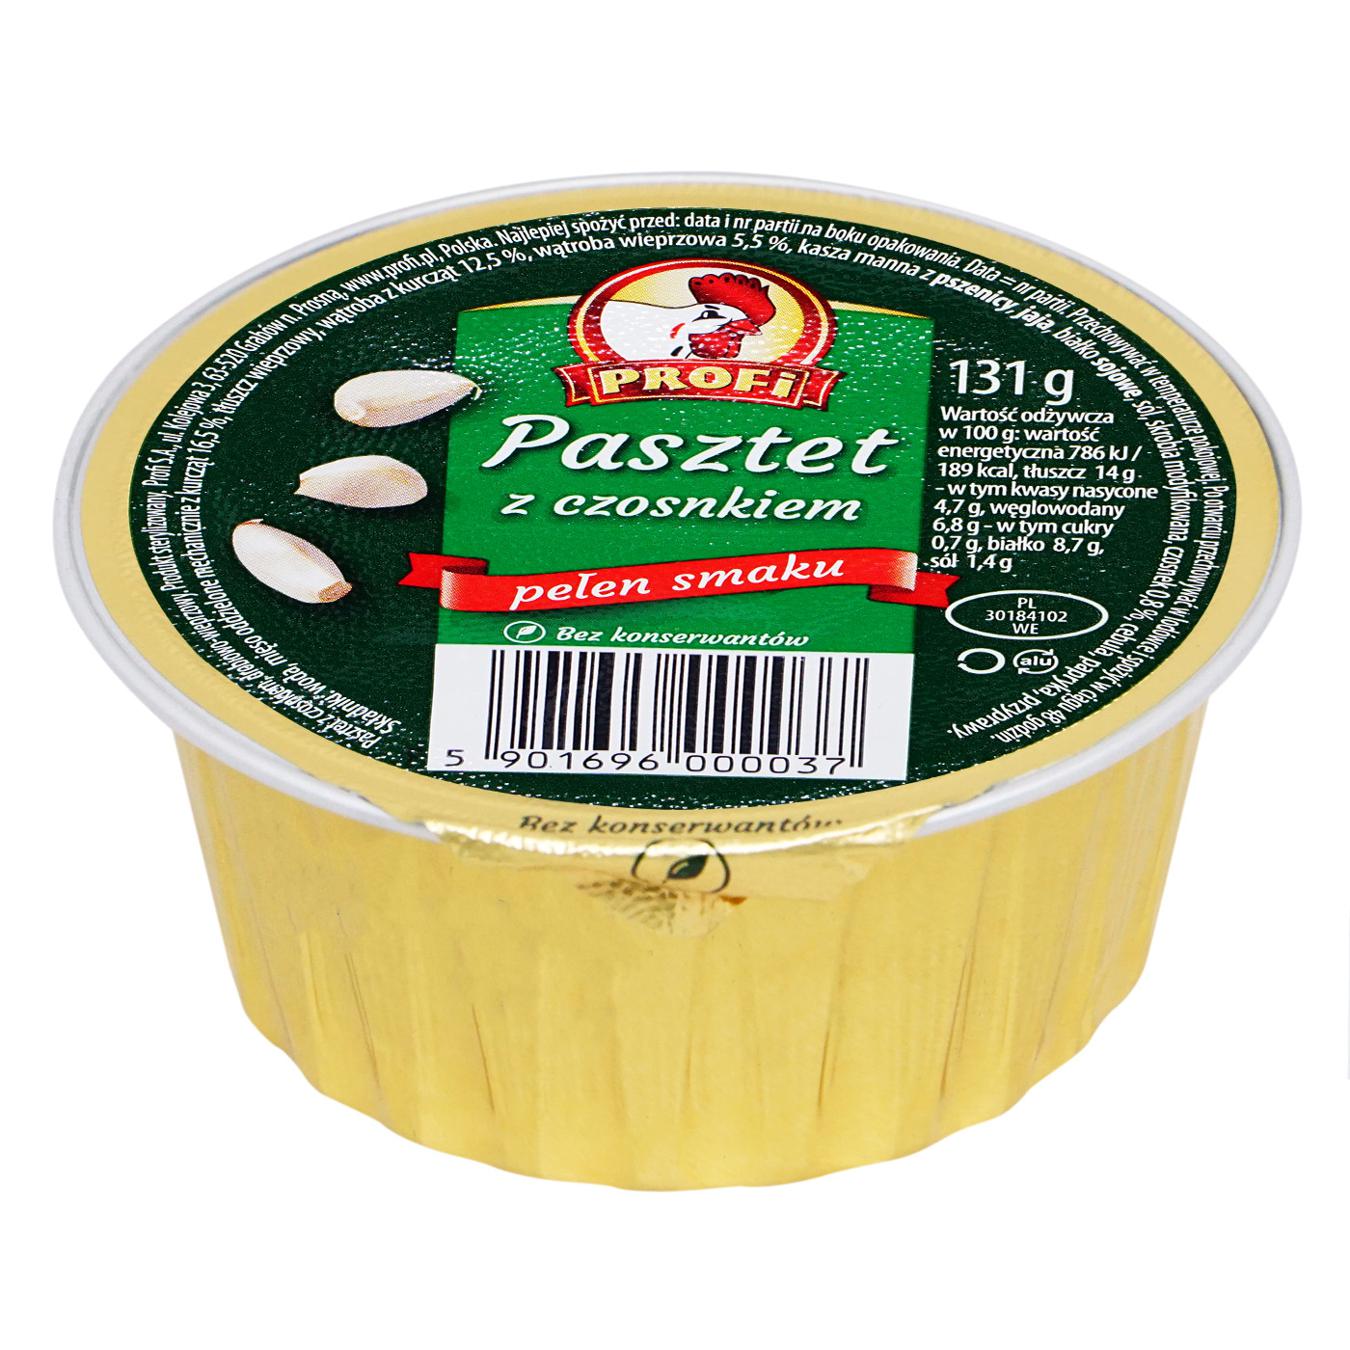 Profi pate with chicken and garlic 131g